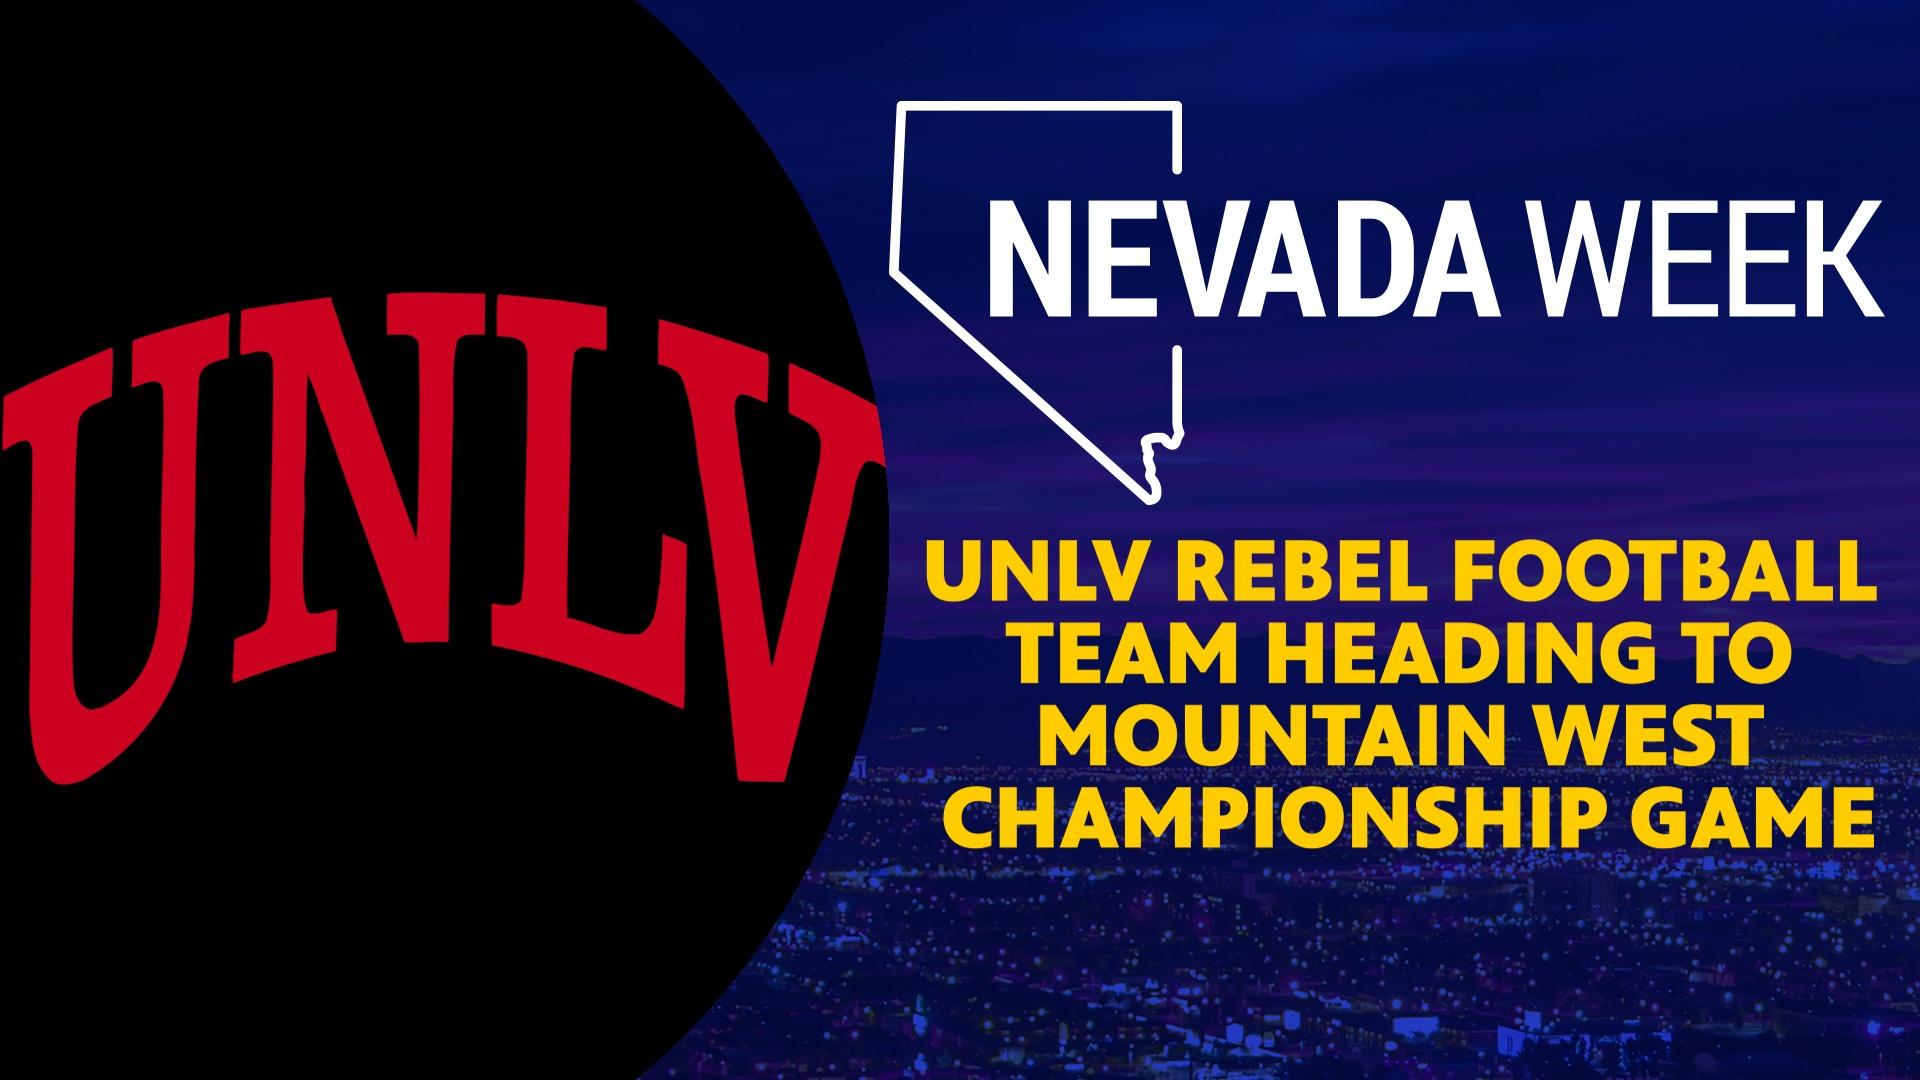 UNLV Rebel Football Team heading to Mt. West championship.